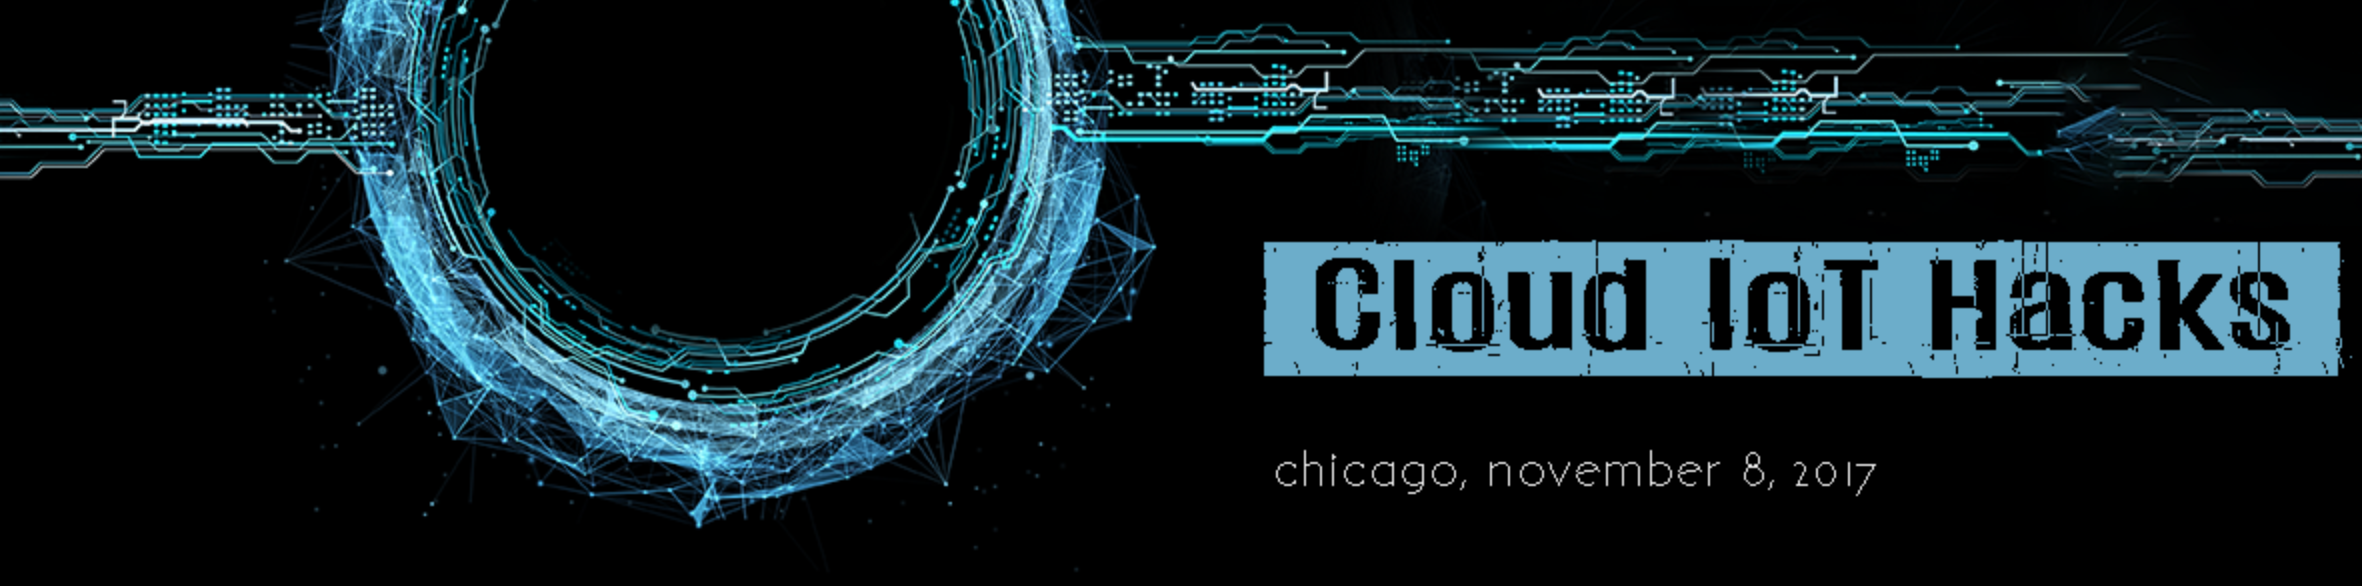 Microsoft Cloud IoT Hacks Chicago